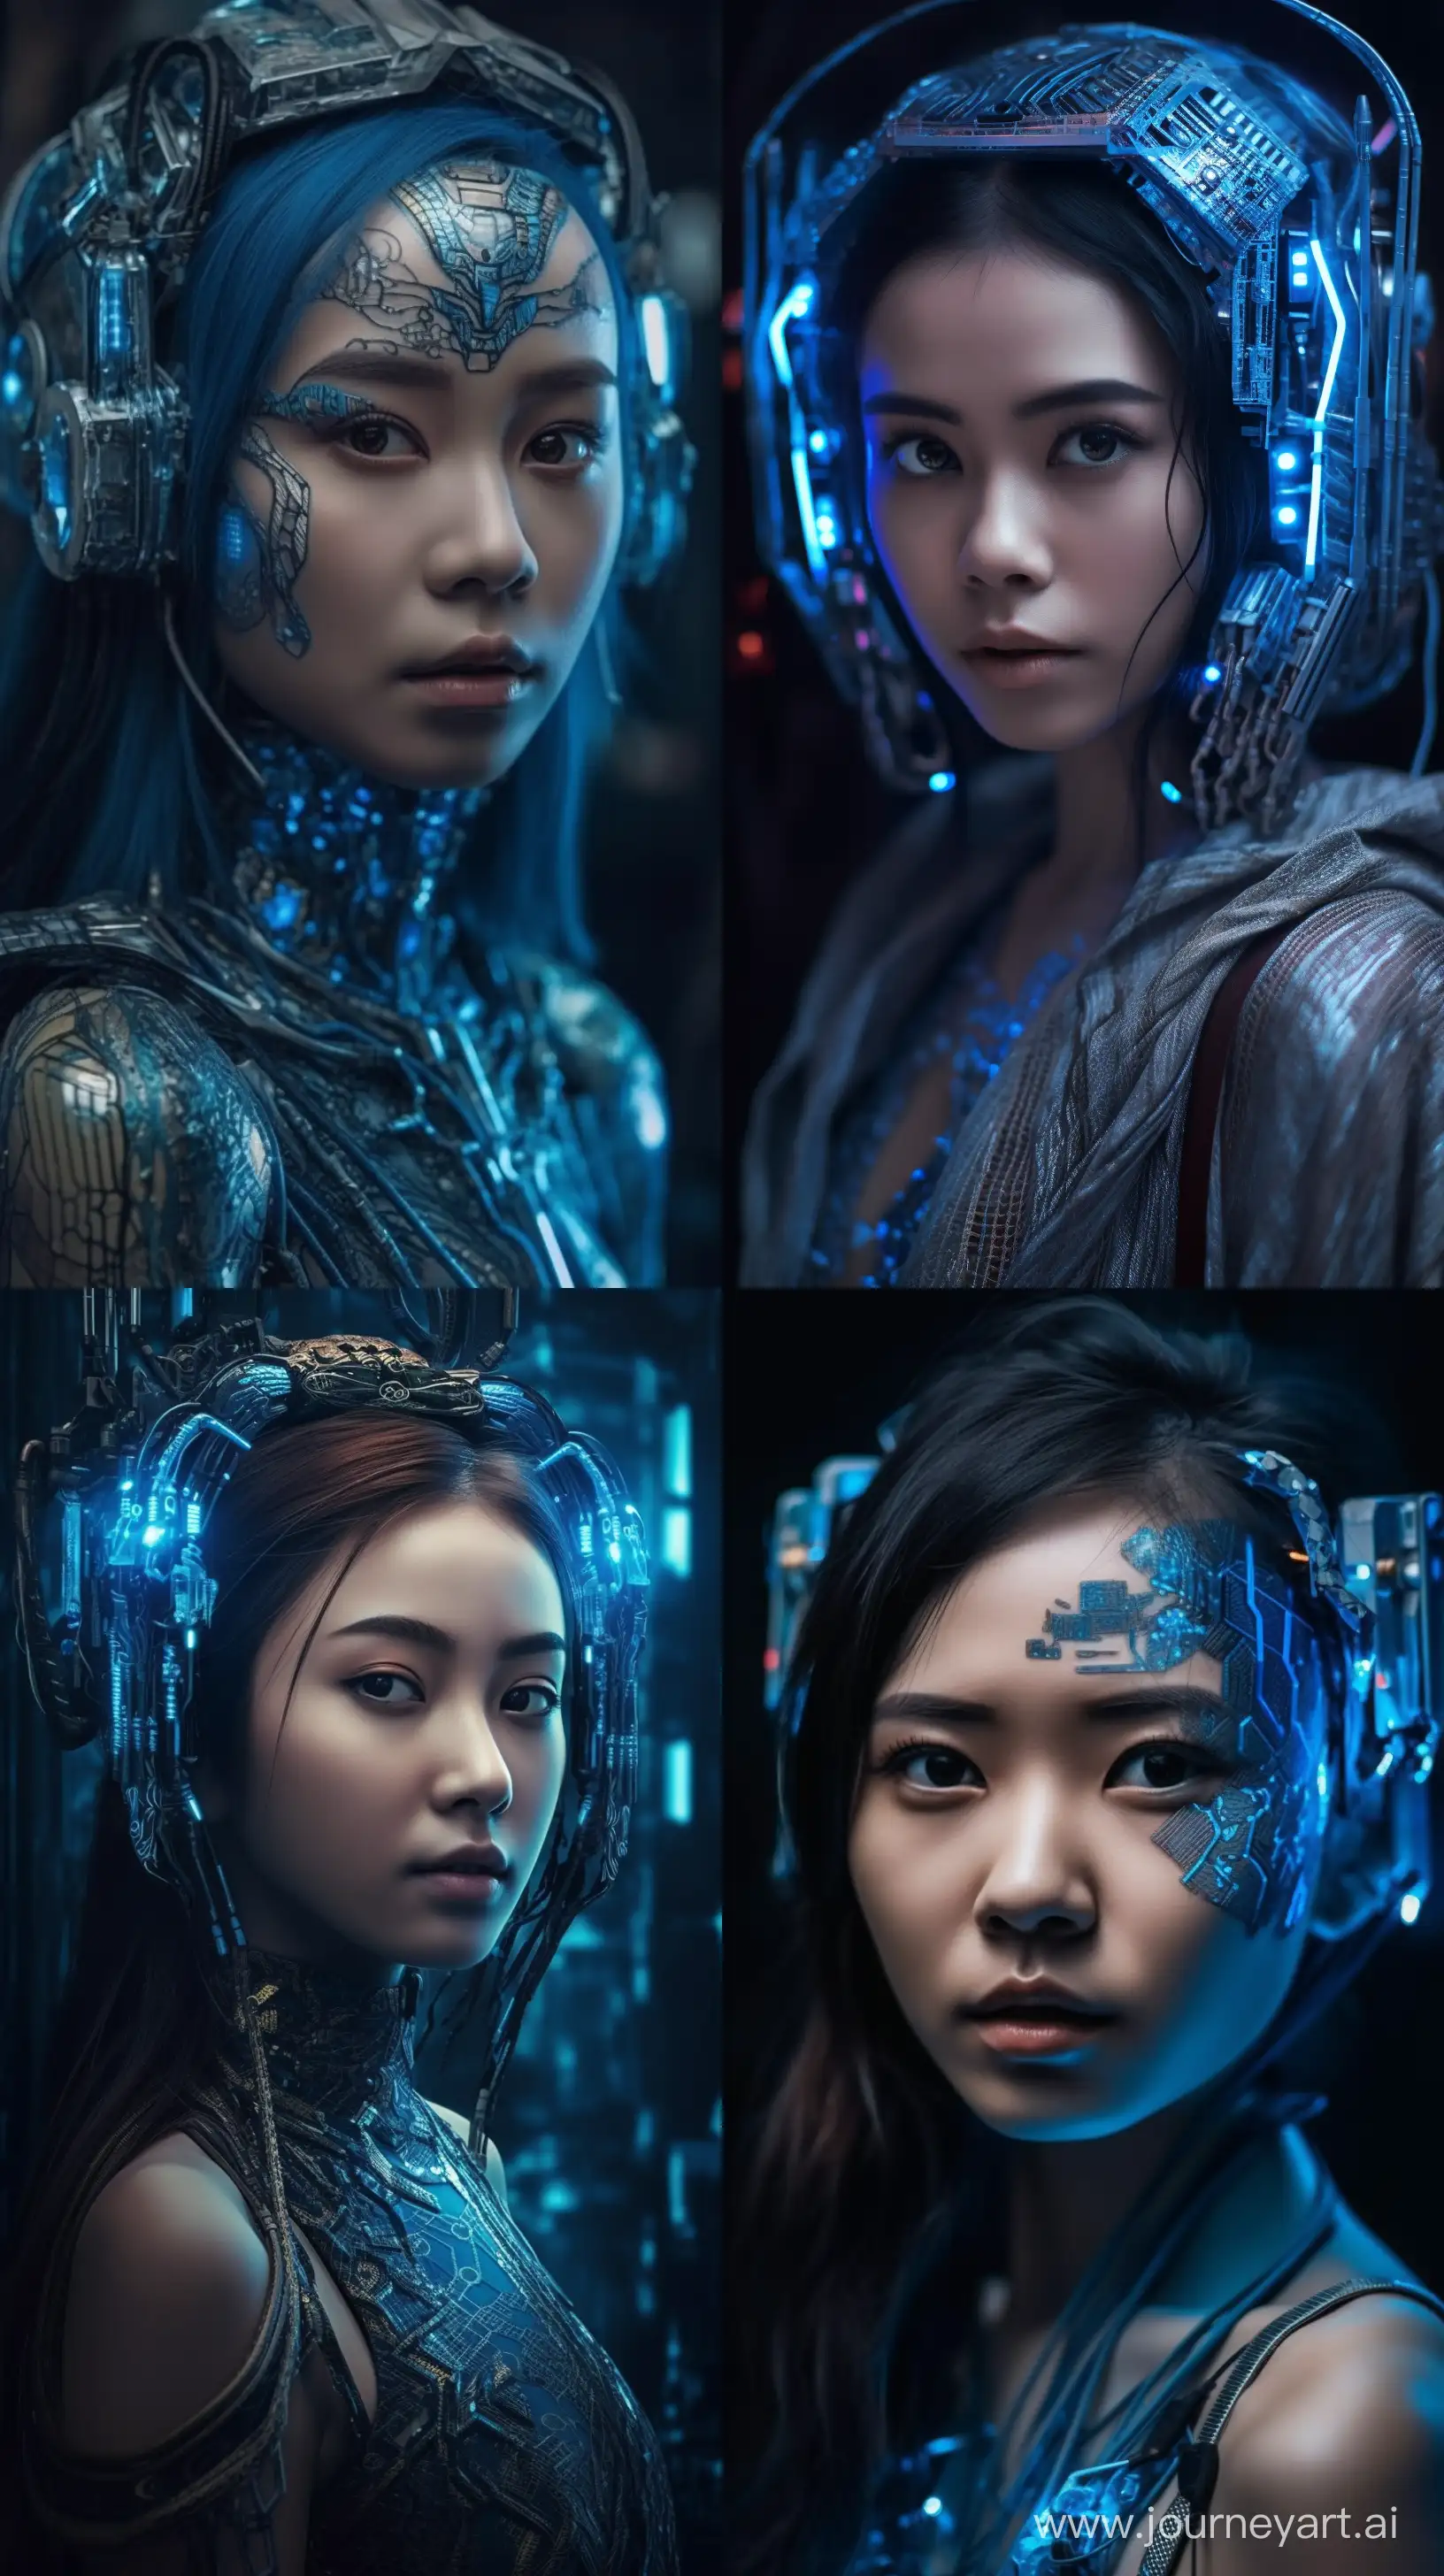 Futuristic-Indonesian-Cyborg-Girl-with-Blue-Circuit-Aesthetics